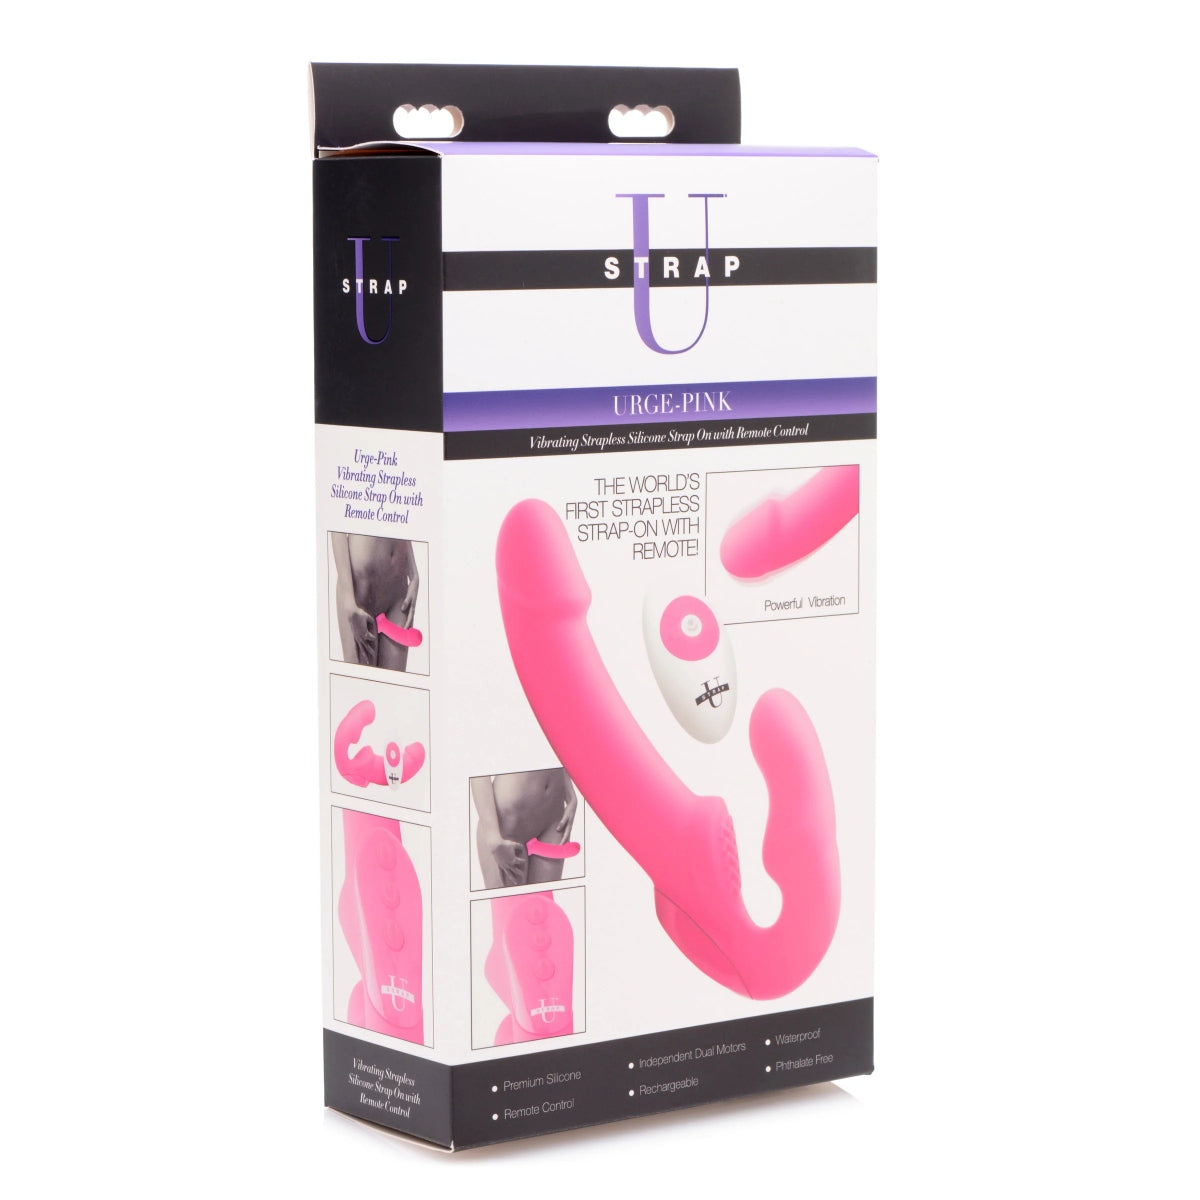 Strap U Urge Remote Control Vibrating Silicone Strapless Strap-On Pink